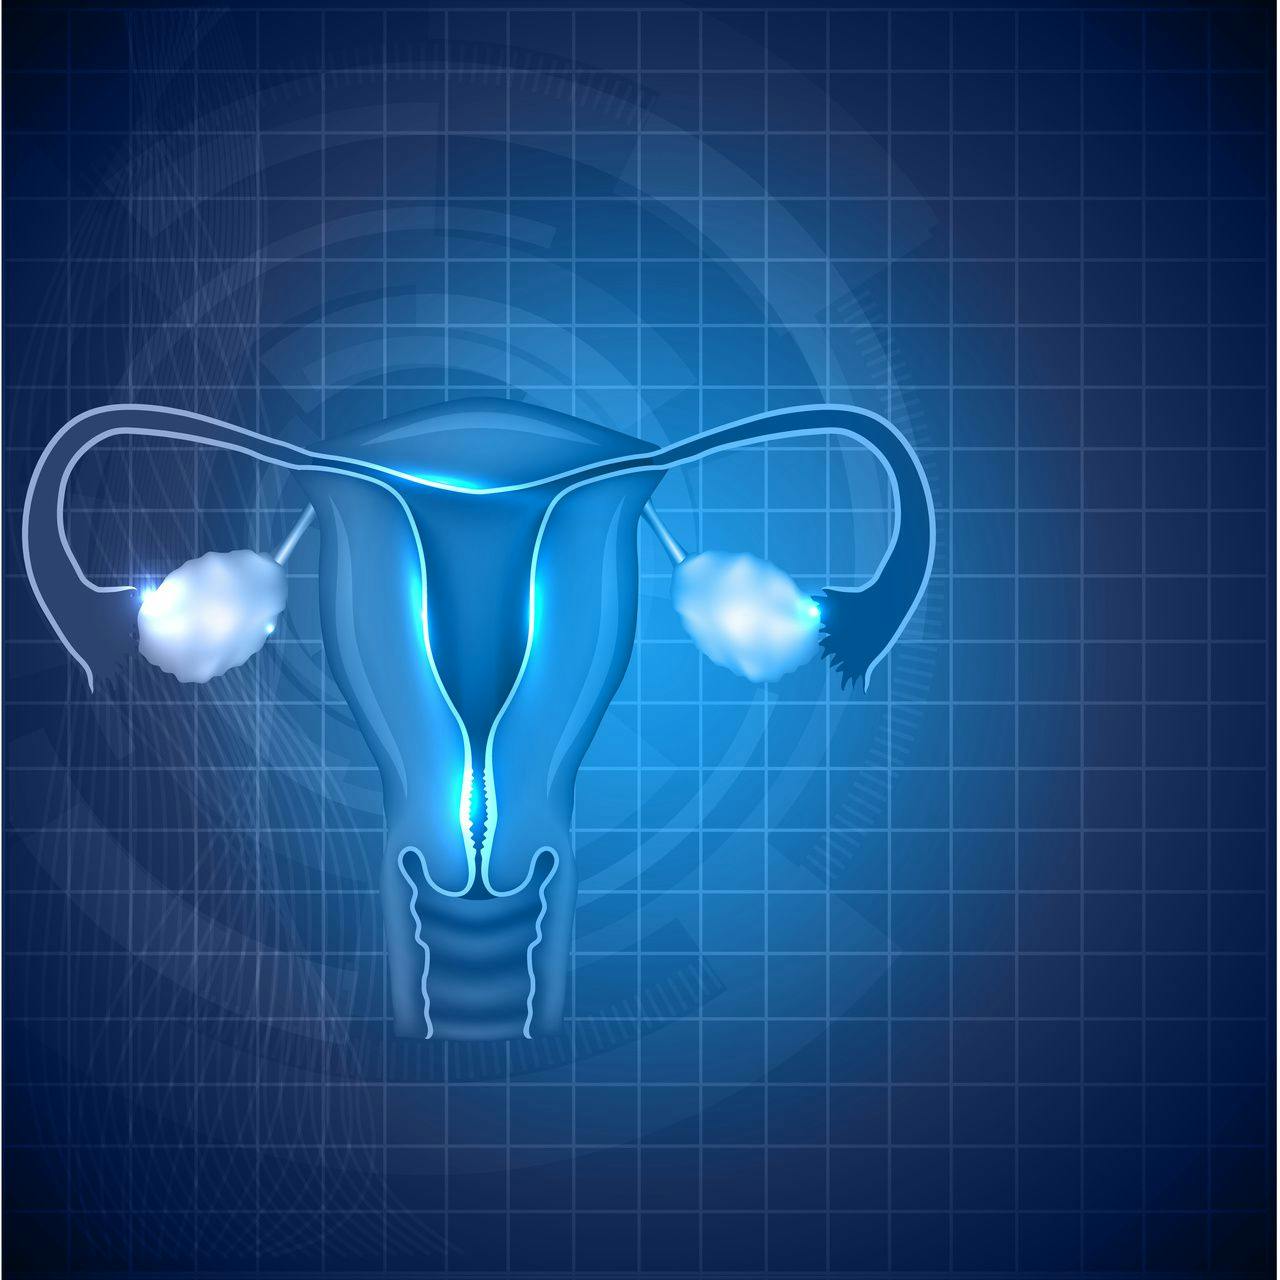 Ovaries and uterus